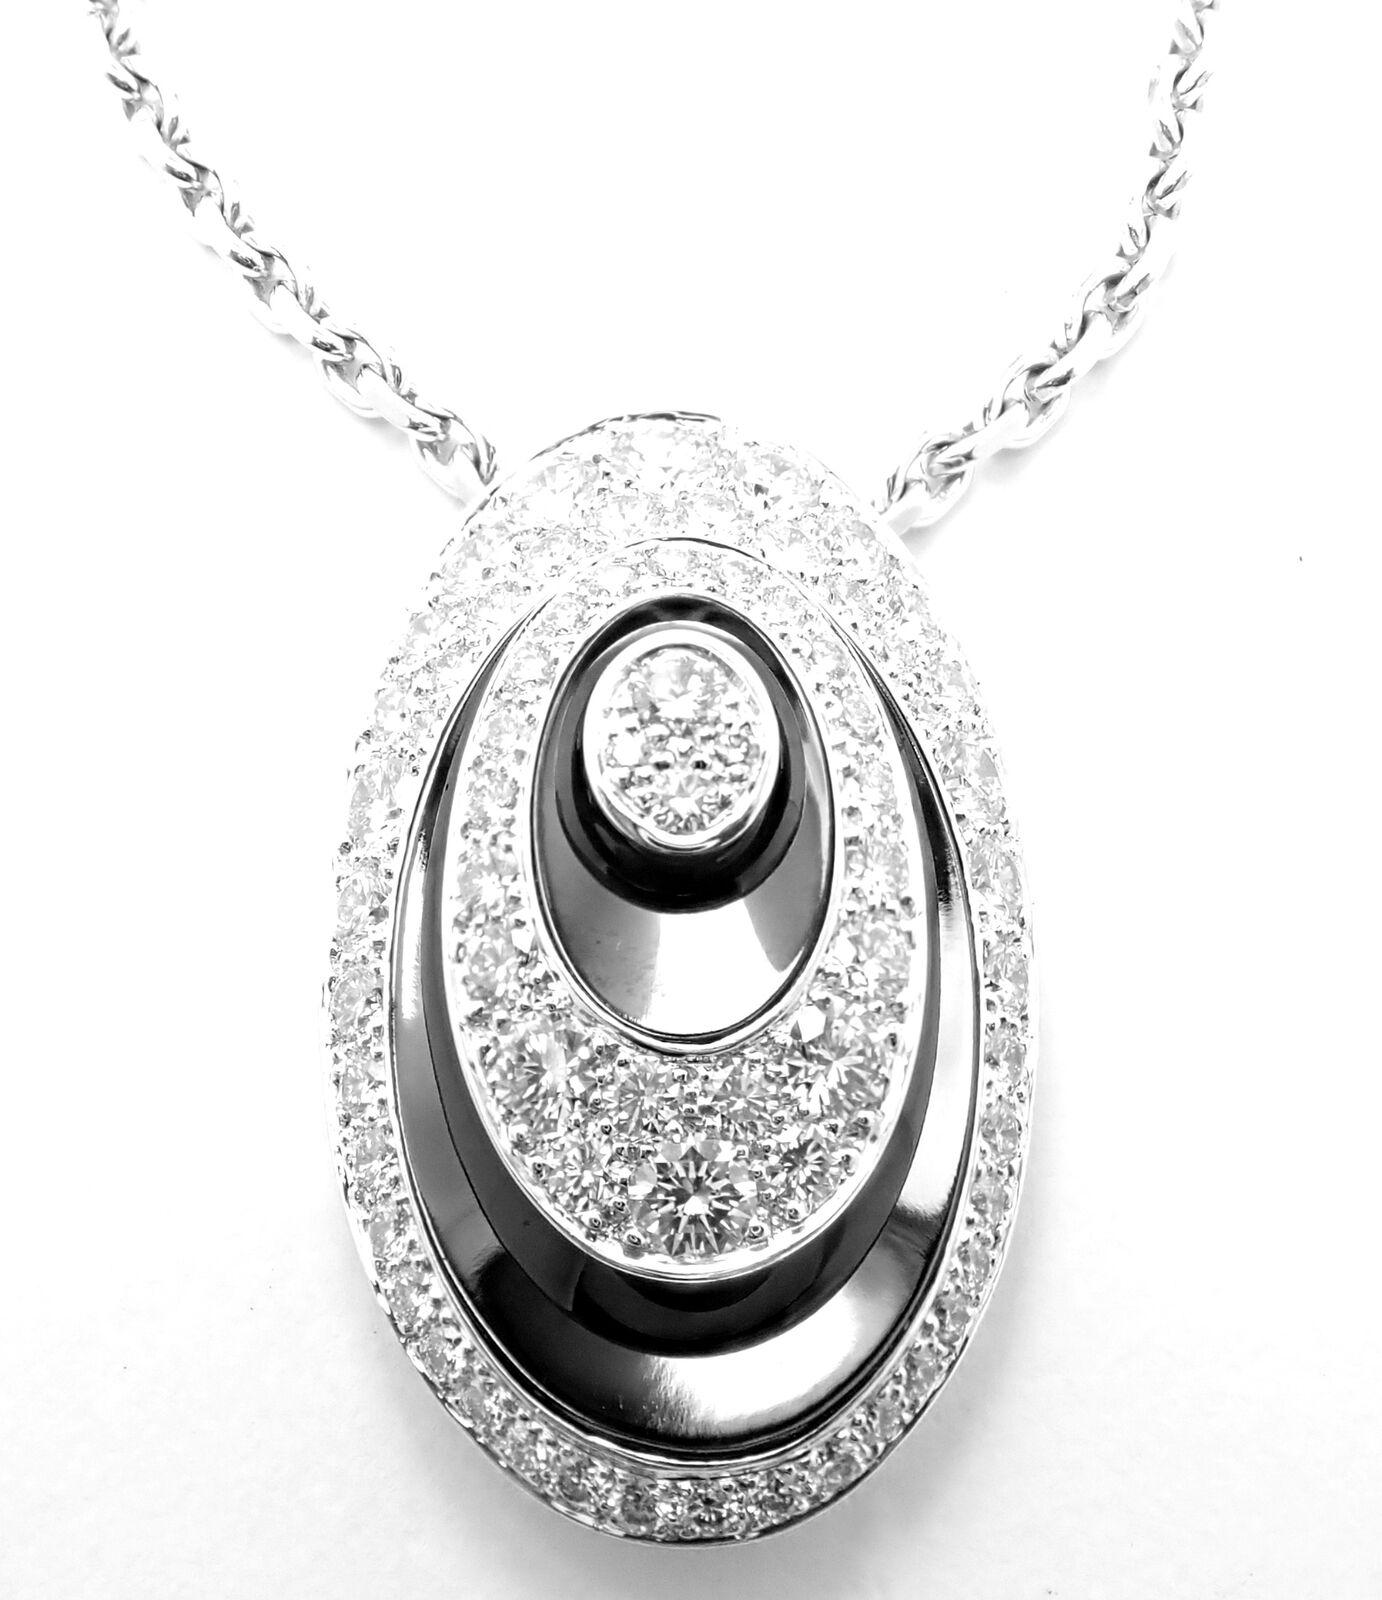 Cartier, collier pendentif hypnose en or blanc, chaîne et cordon de soie en vente 2